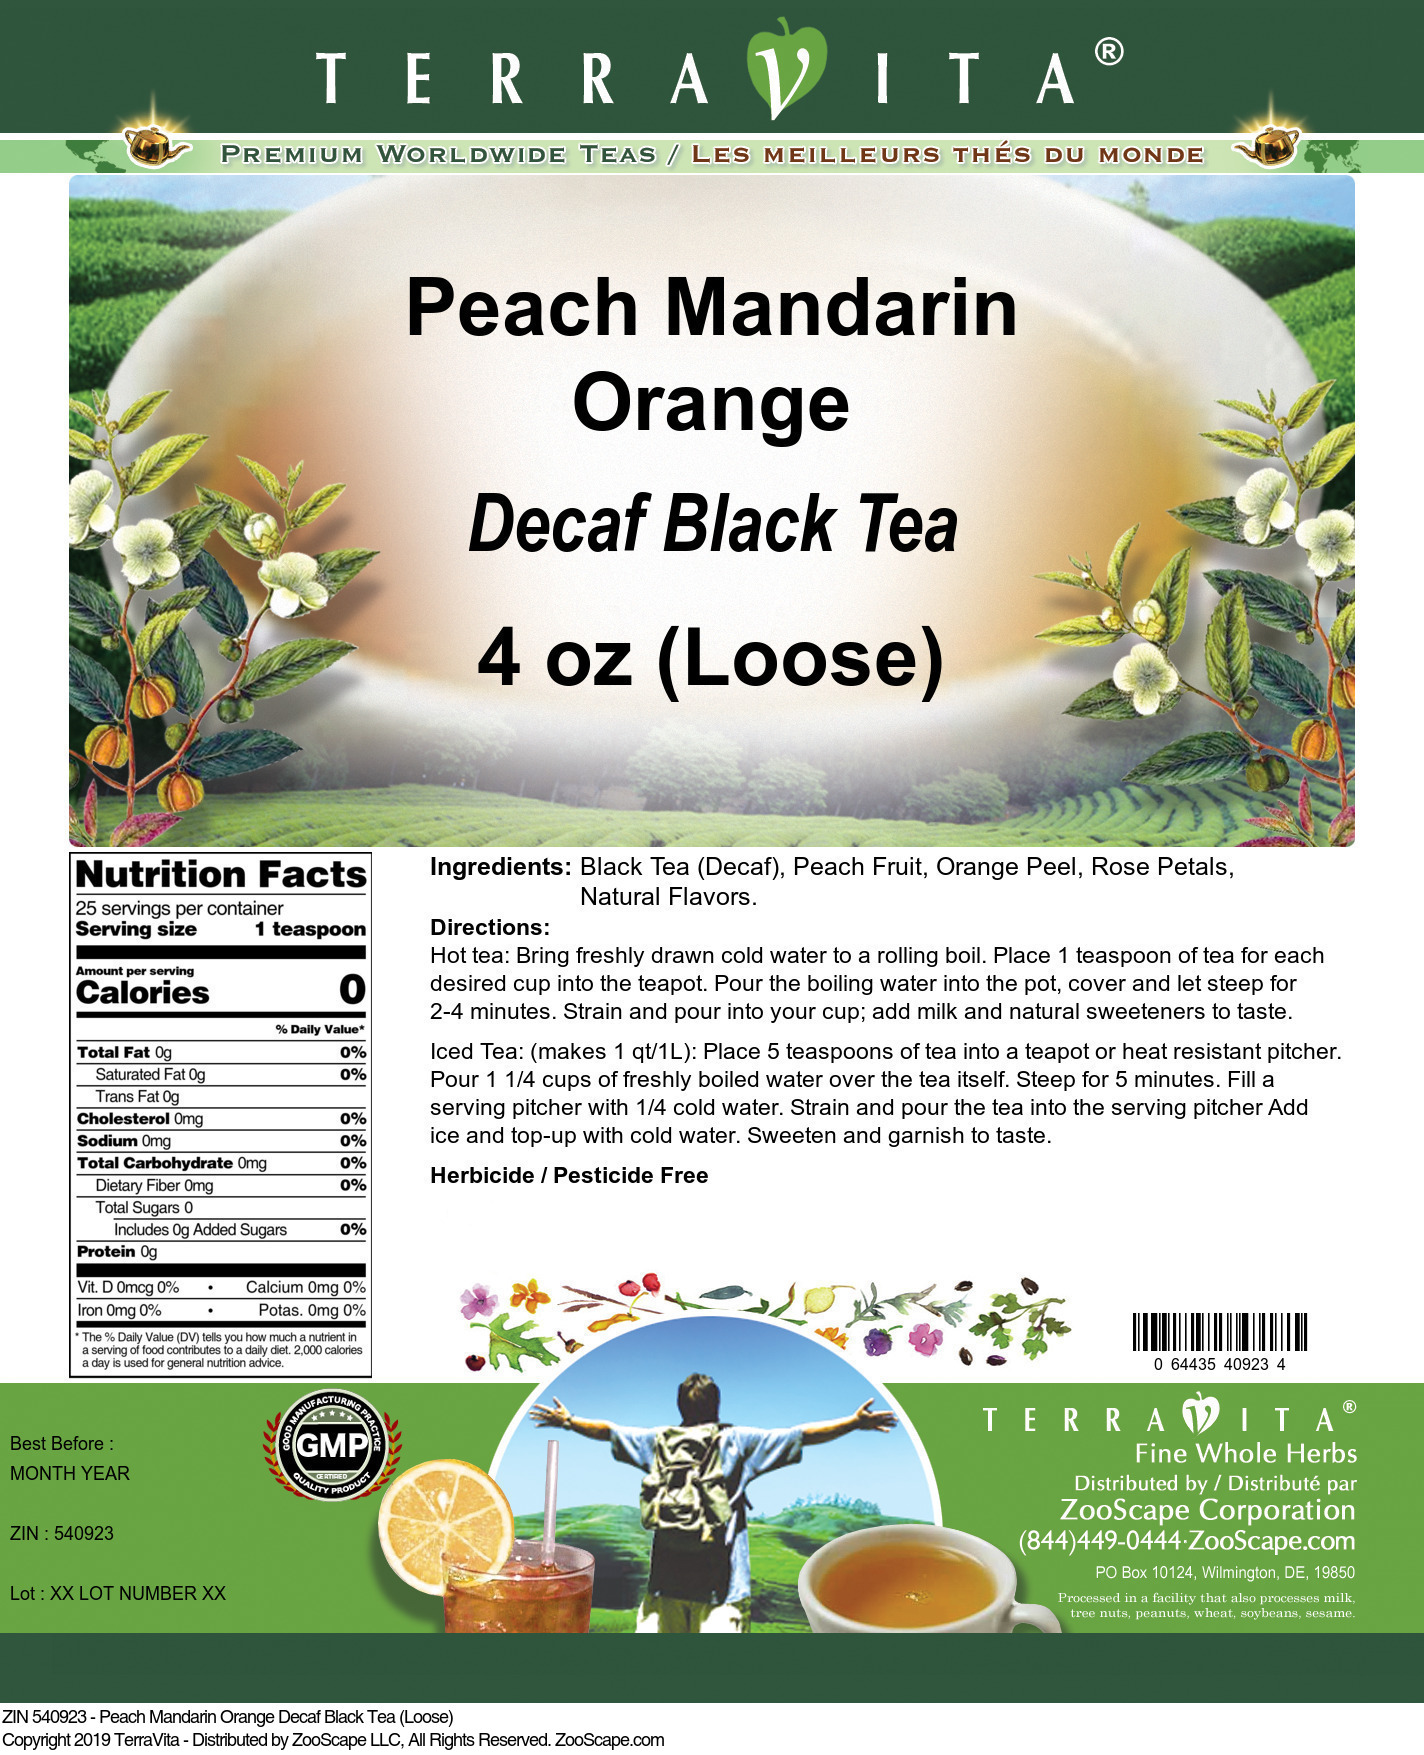 Peach Mandarin Orange Decaf Black Tea (Loose) - Label